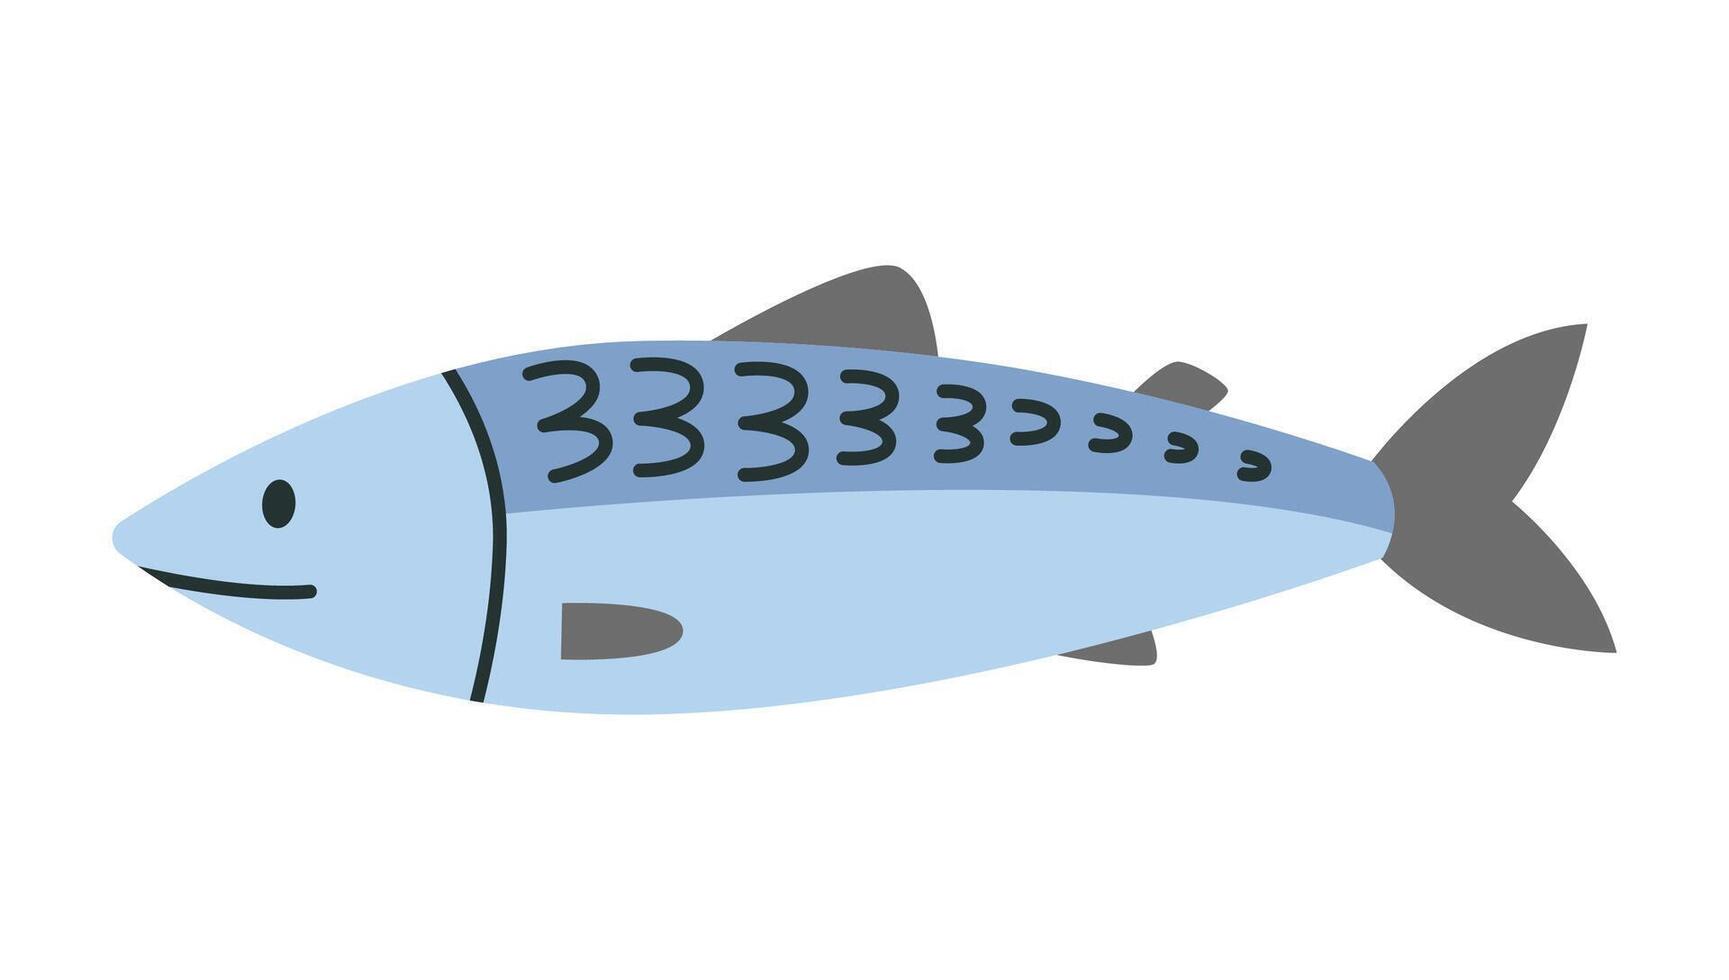 Mackerel fish, cartoon style. Trendy modern vector illustration isolated on white background, hand drawn, flat design